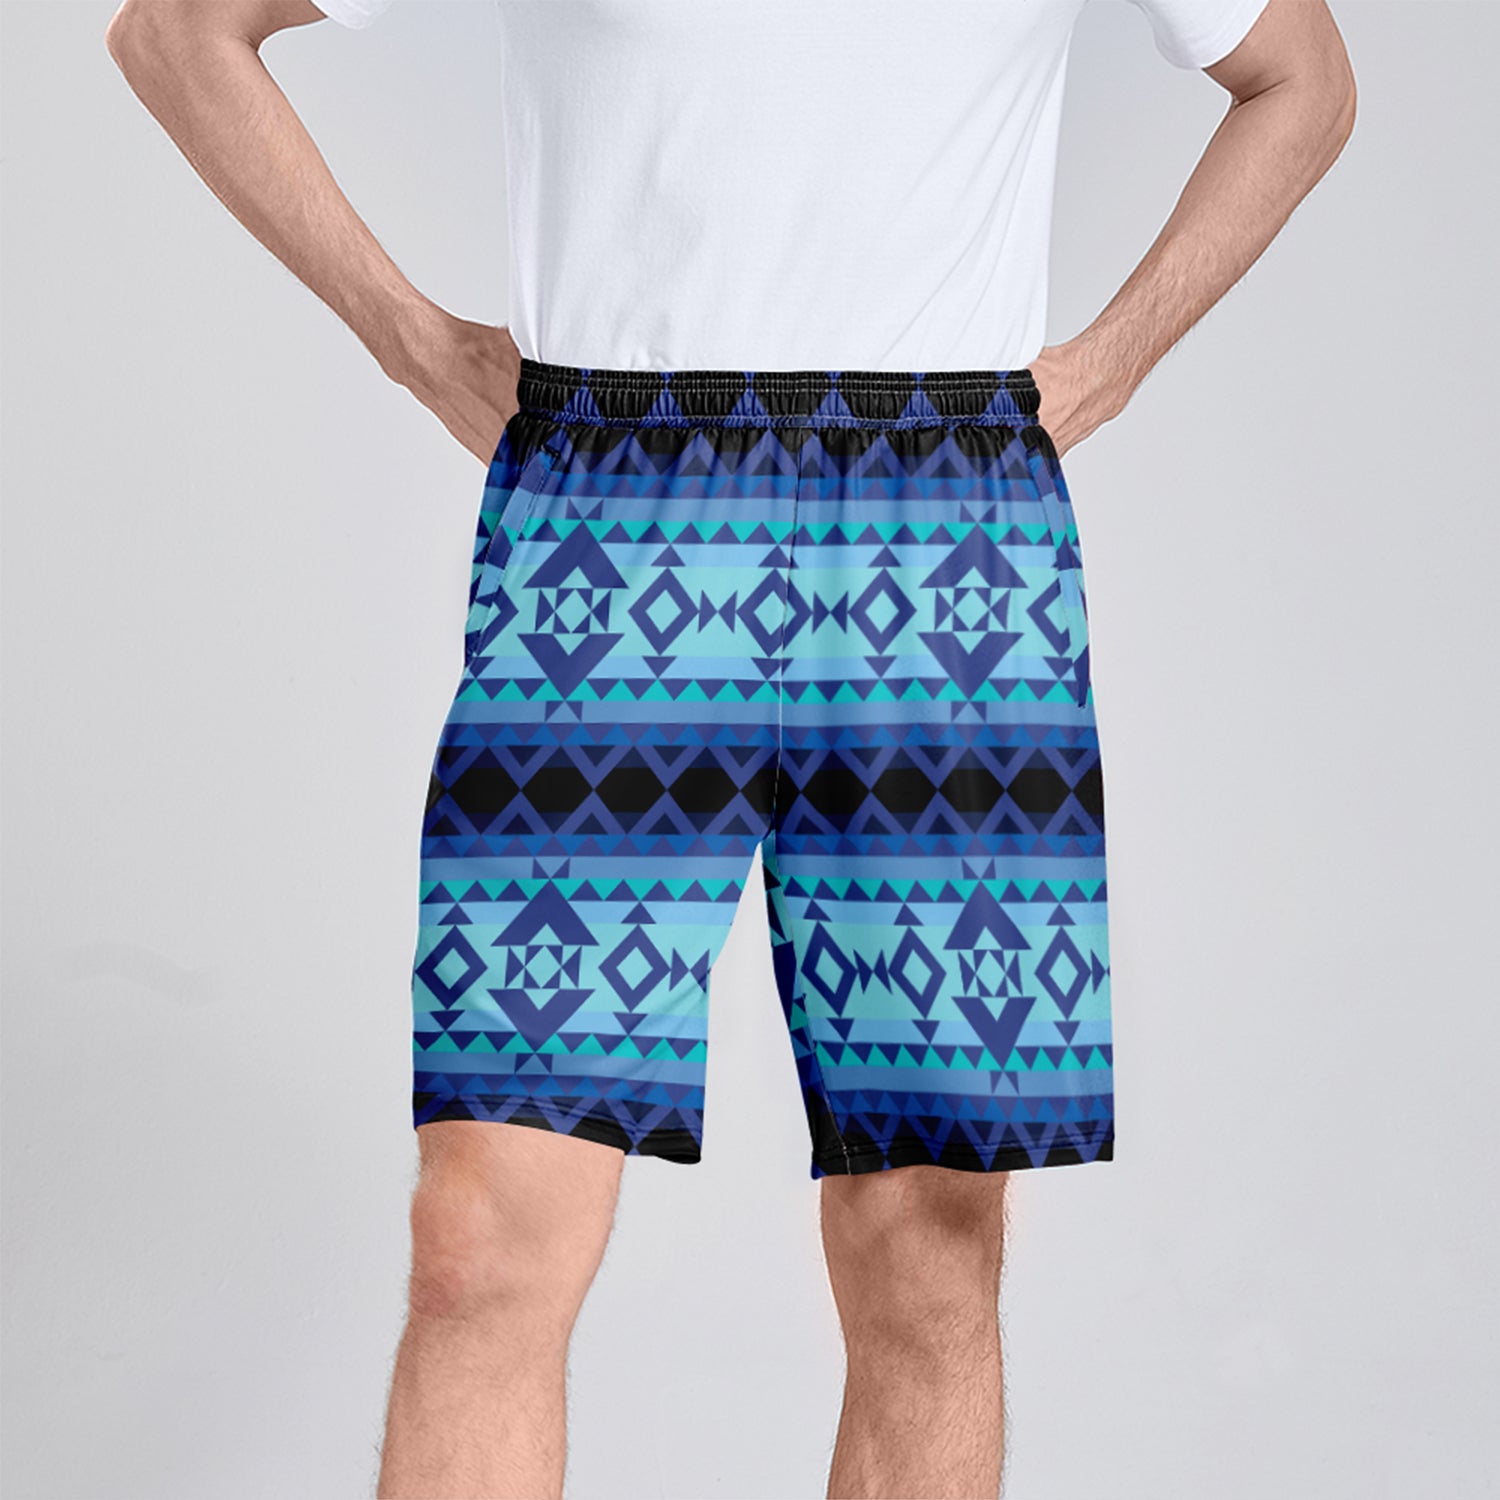 Tipi Athletic Shorts with Pockets